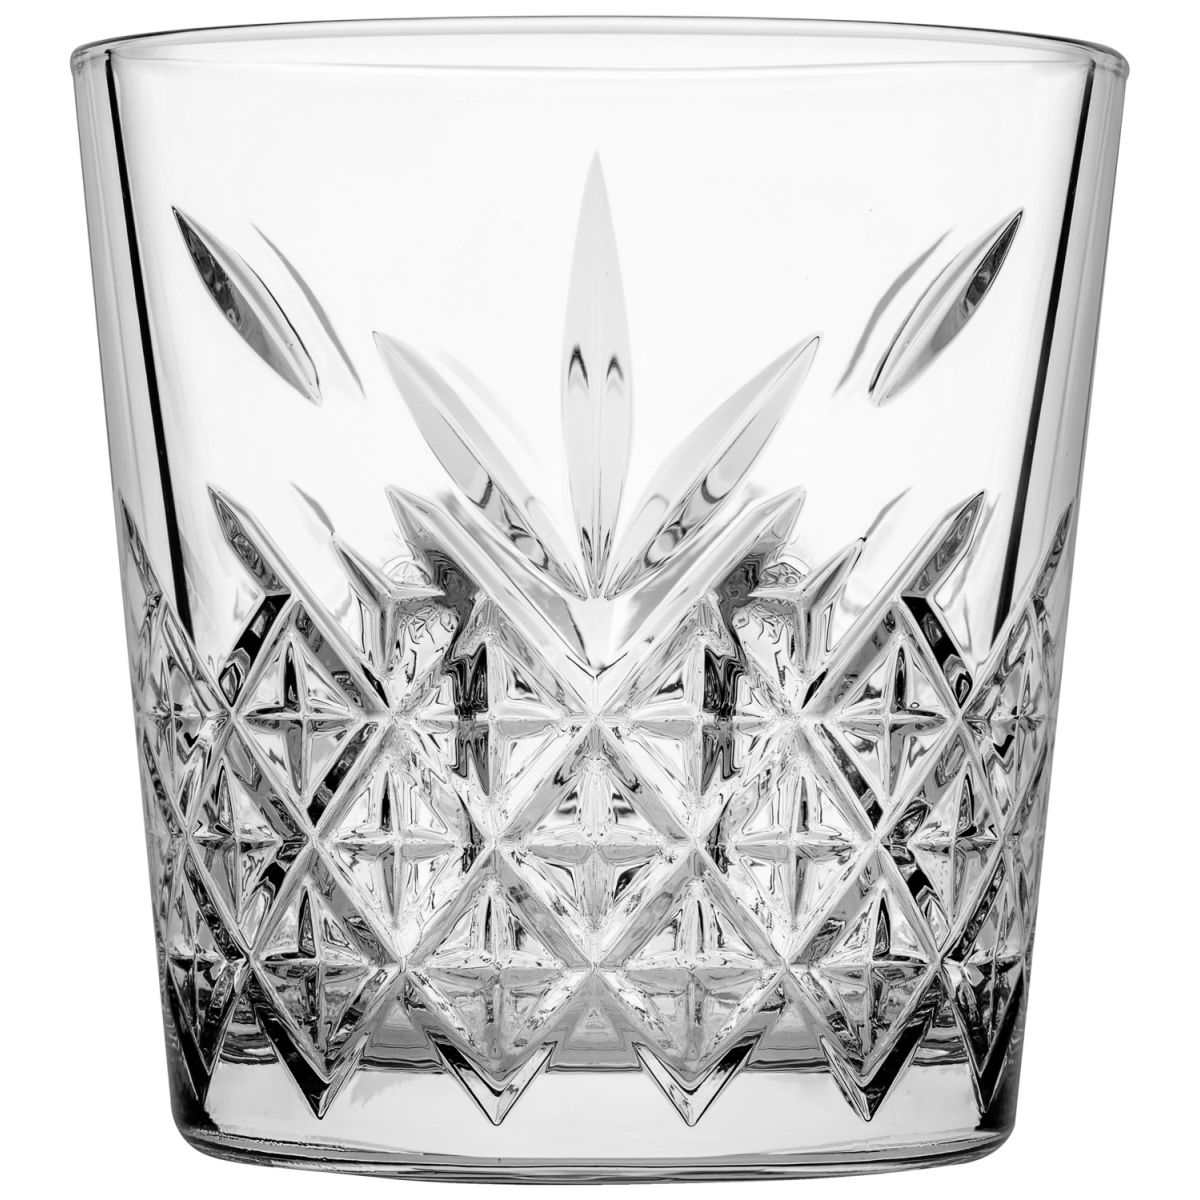 Pasabahçe Whiskyglas Timeless V-Block; 355ml, 9.2x9.6 cm (ØxH); transparant; 6 stuk / verpakking